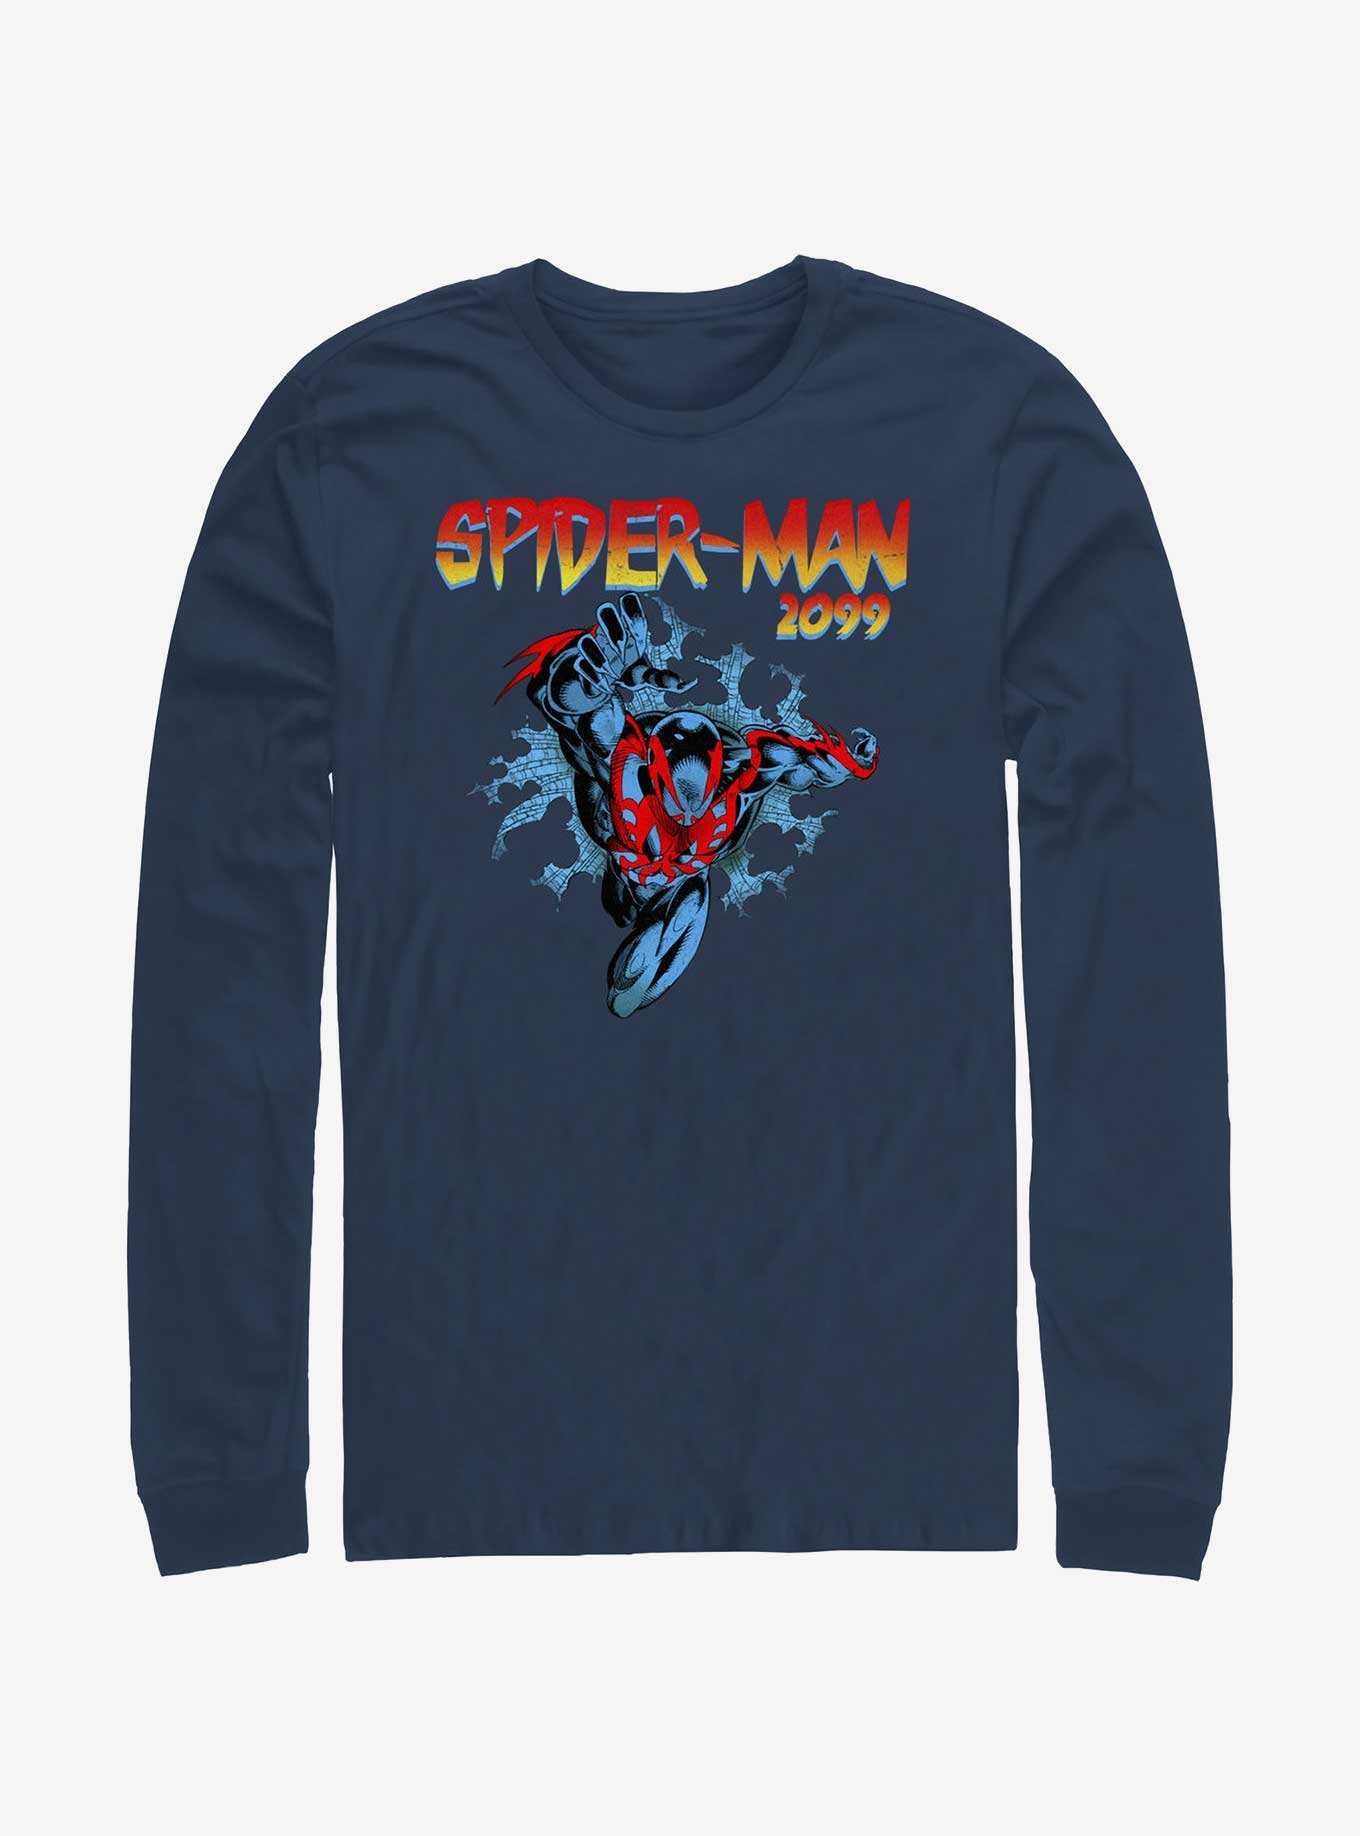 Marvel Spider-Man-2099 Long-Sleeve T-Shirt, , hi-res